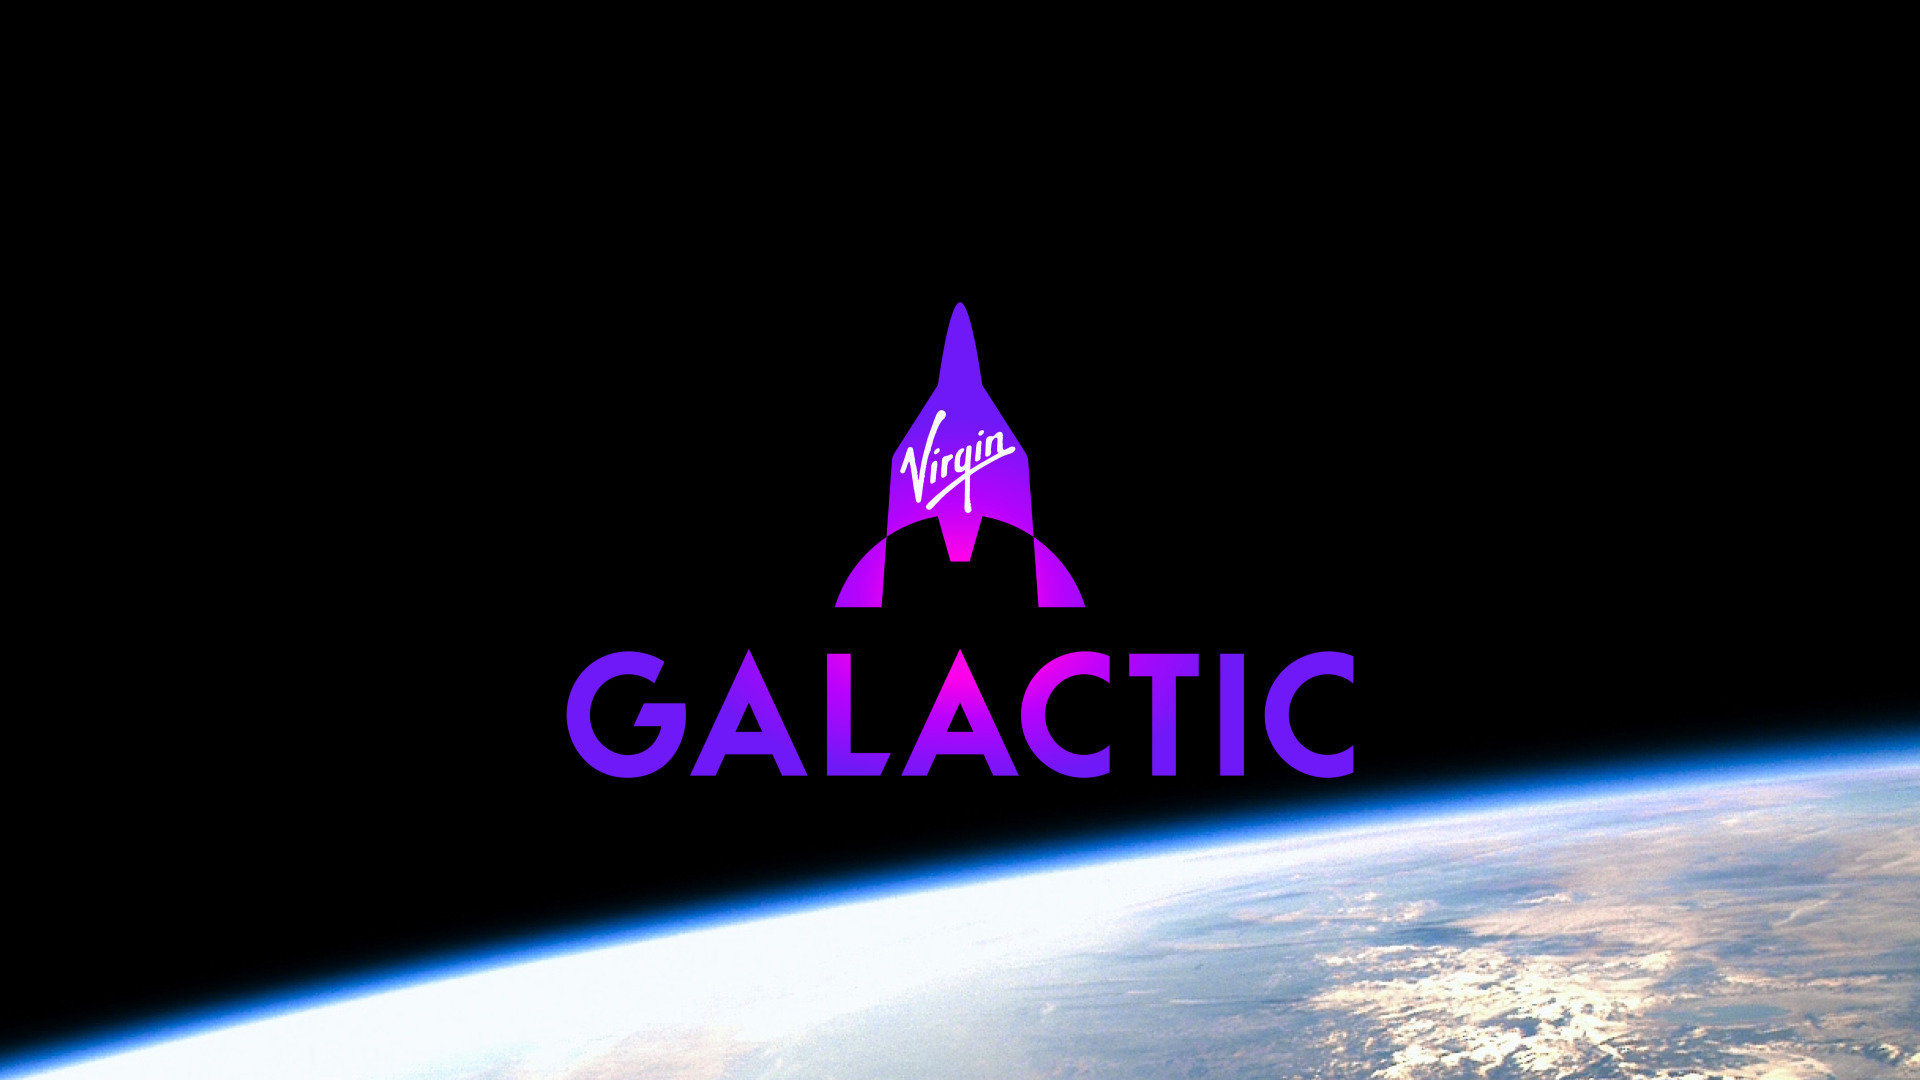 Virgin Galactic จะเริ่มเที่ยวบินท่องอวกาศเชิงพาณิชย์ในอีก 2 สัปดาห์